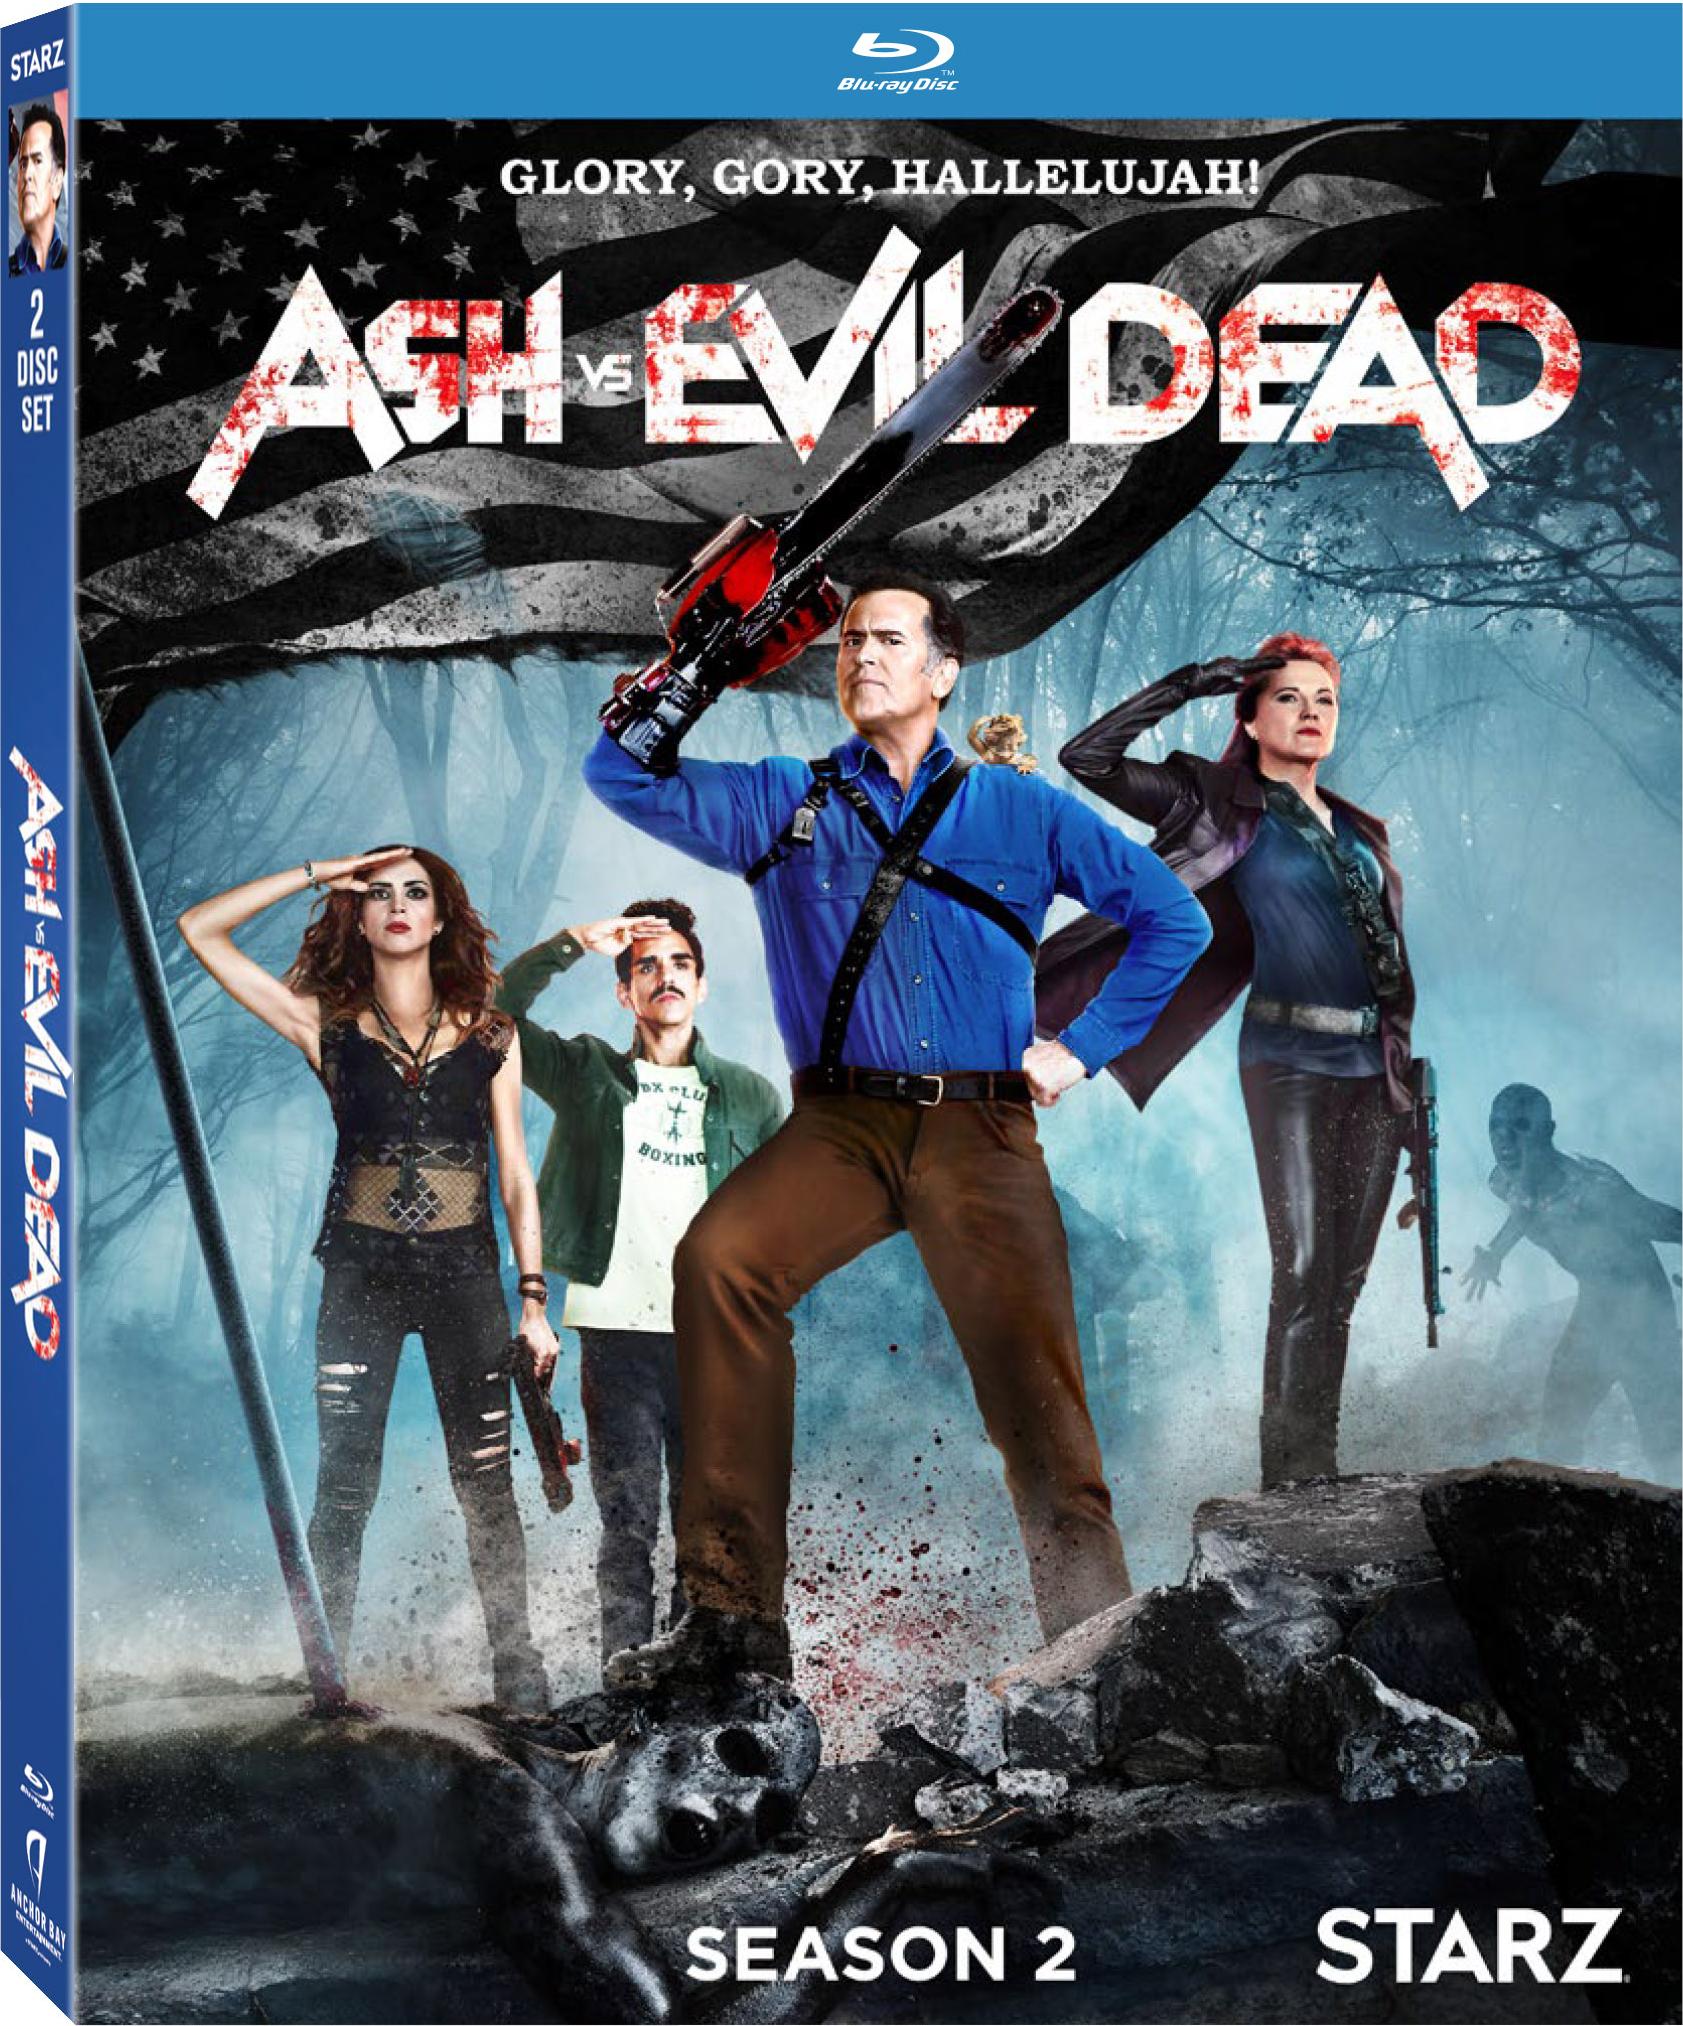 'Ash Vs Evil Dead: Season 2'; Arrives On Blu-ray & DVD August 22, 2017 From Starz & Lionsgate 2